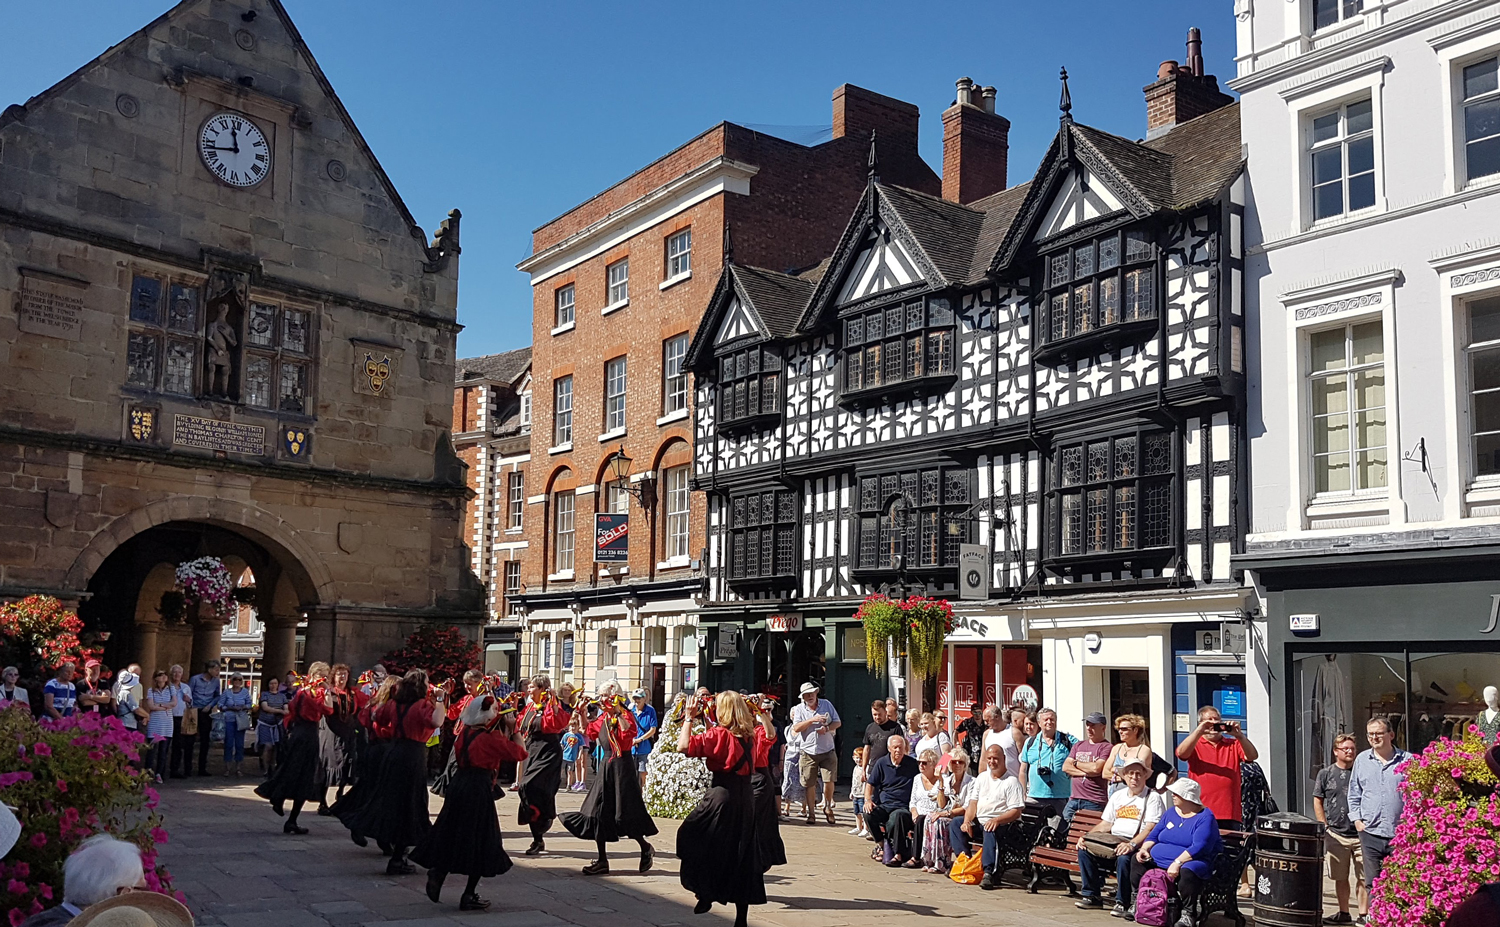 Shrewsbury during the folk festival